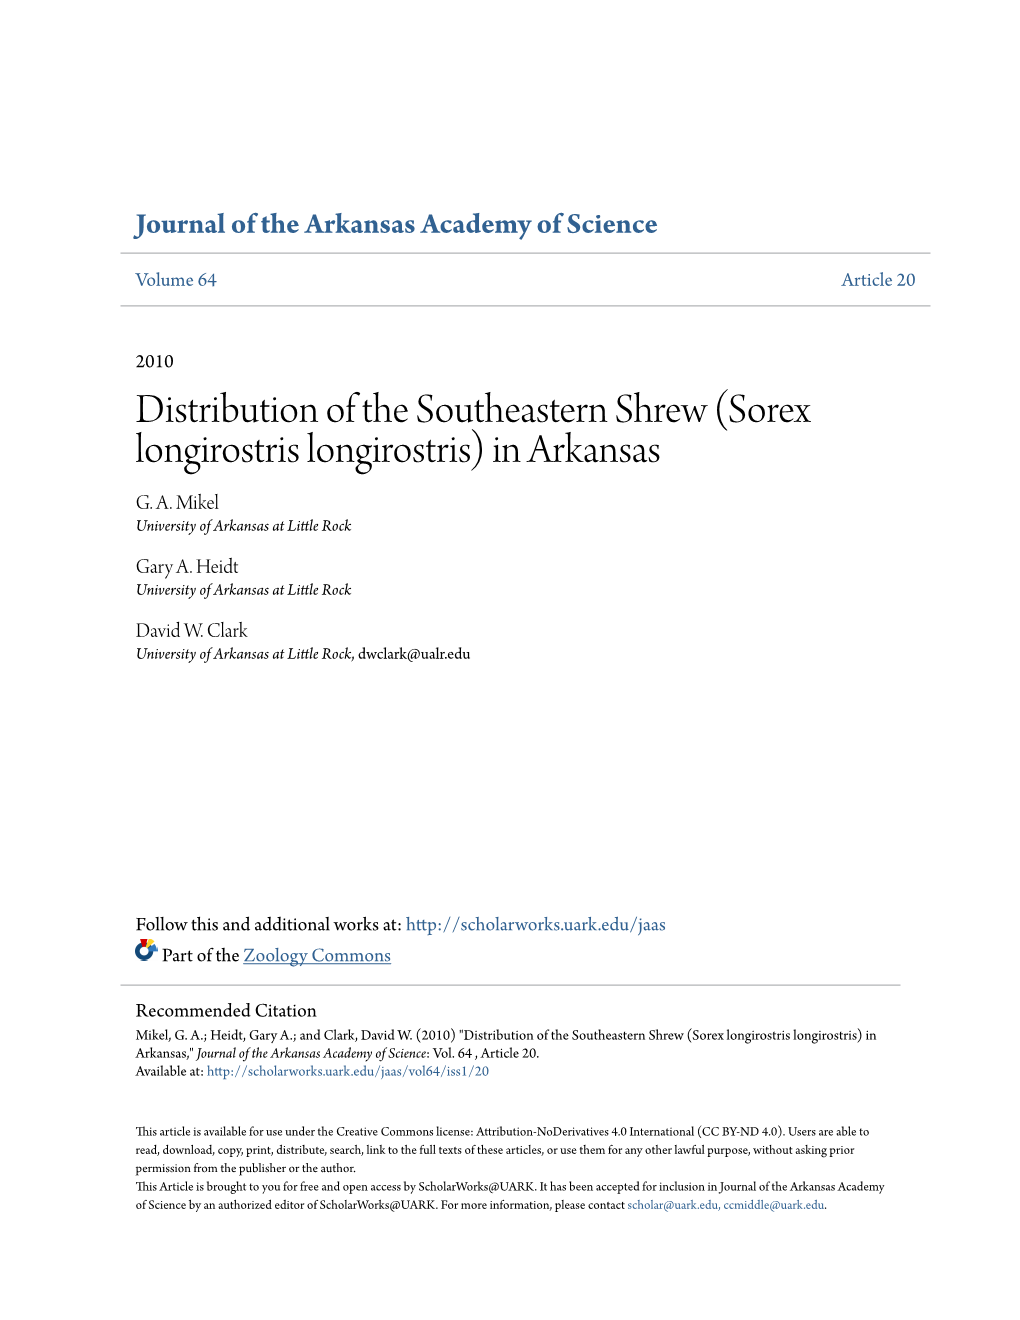 Distribution of the Southeastern Shrew (Sorex Longirostris Longirostris) in Arkansas G